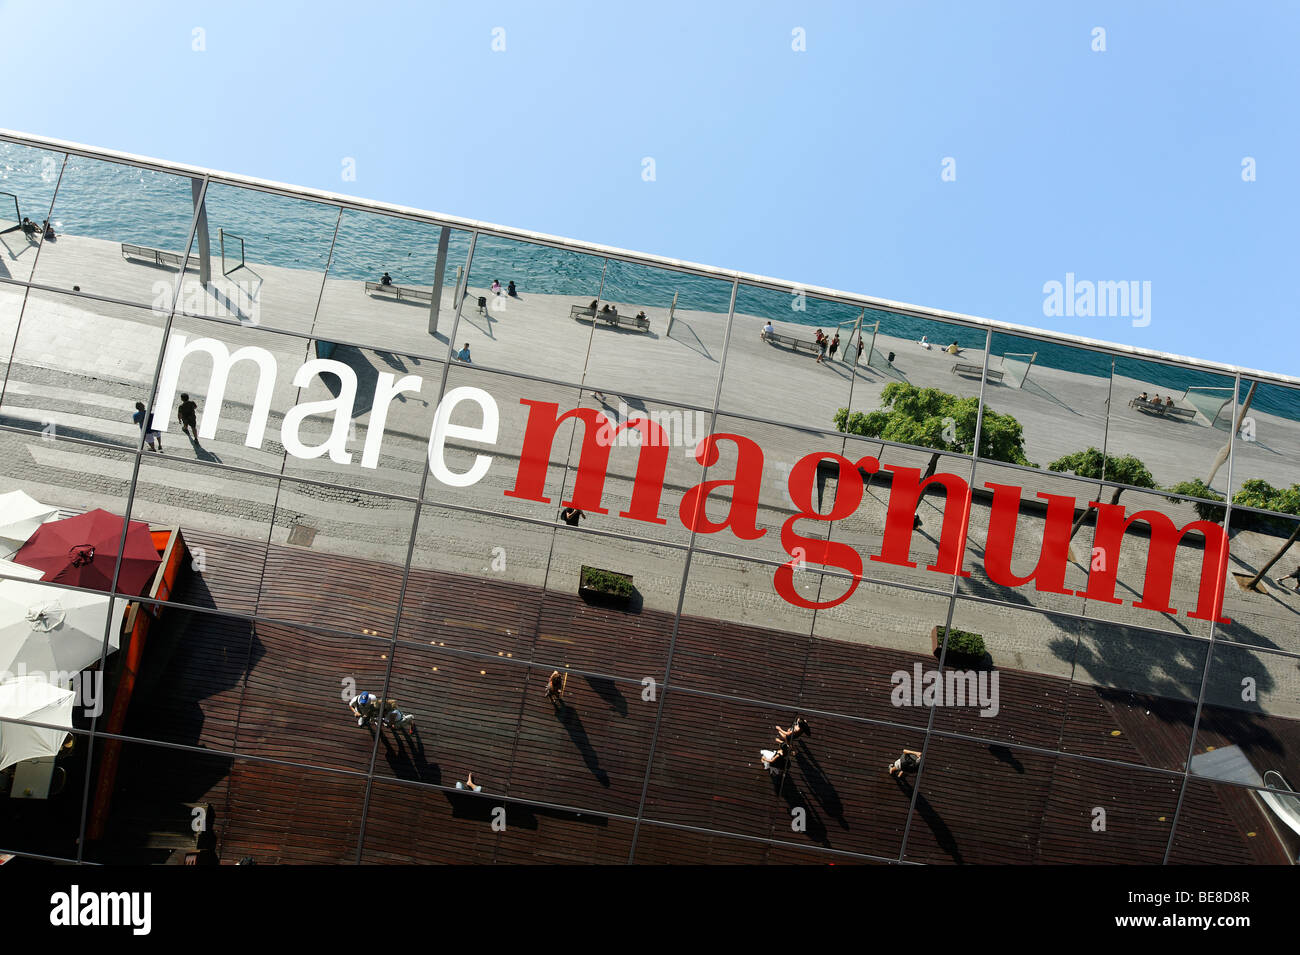 Maremagnum department store sign. Barcelona. Spain Stock Photo